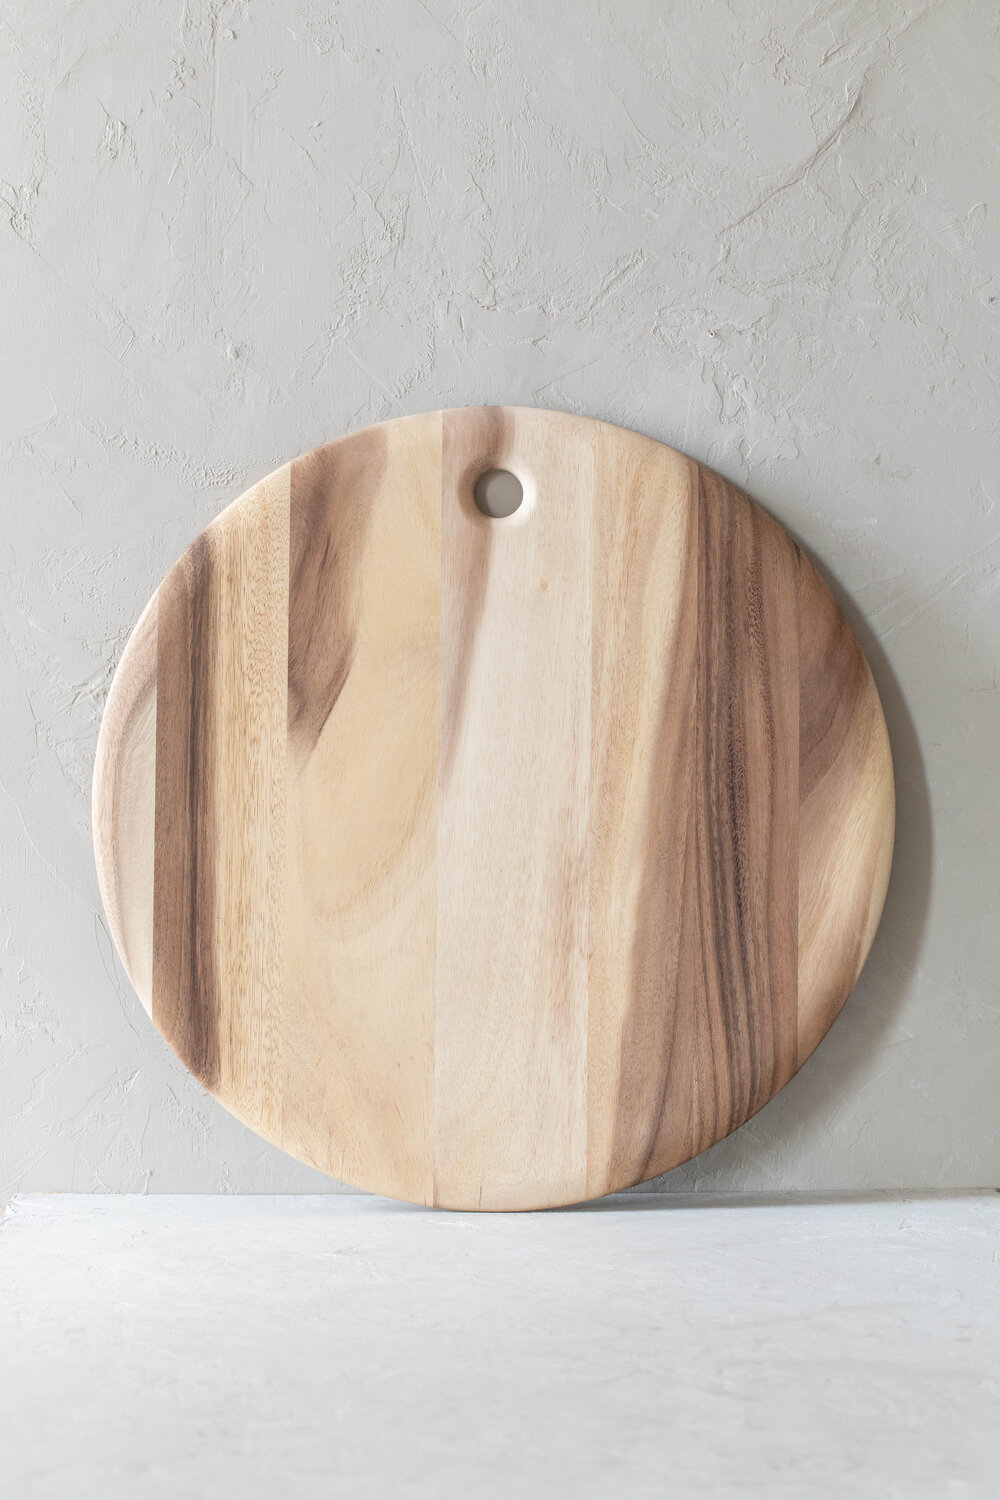 Acacia Wood Cutting Boards, Set of 2